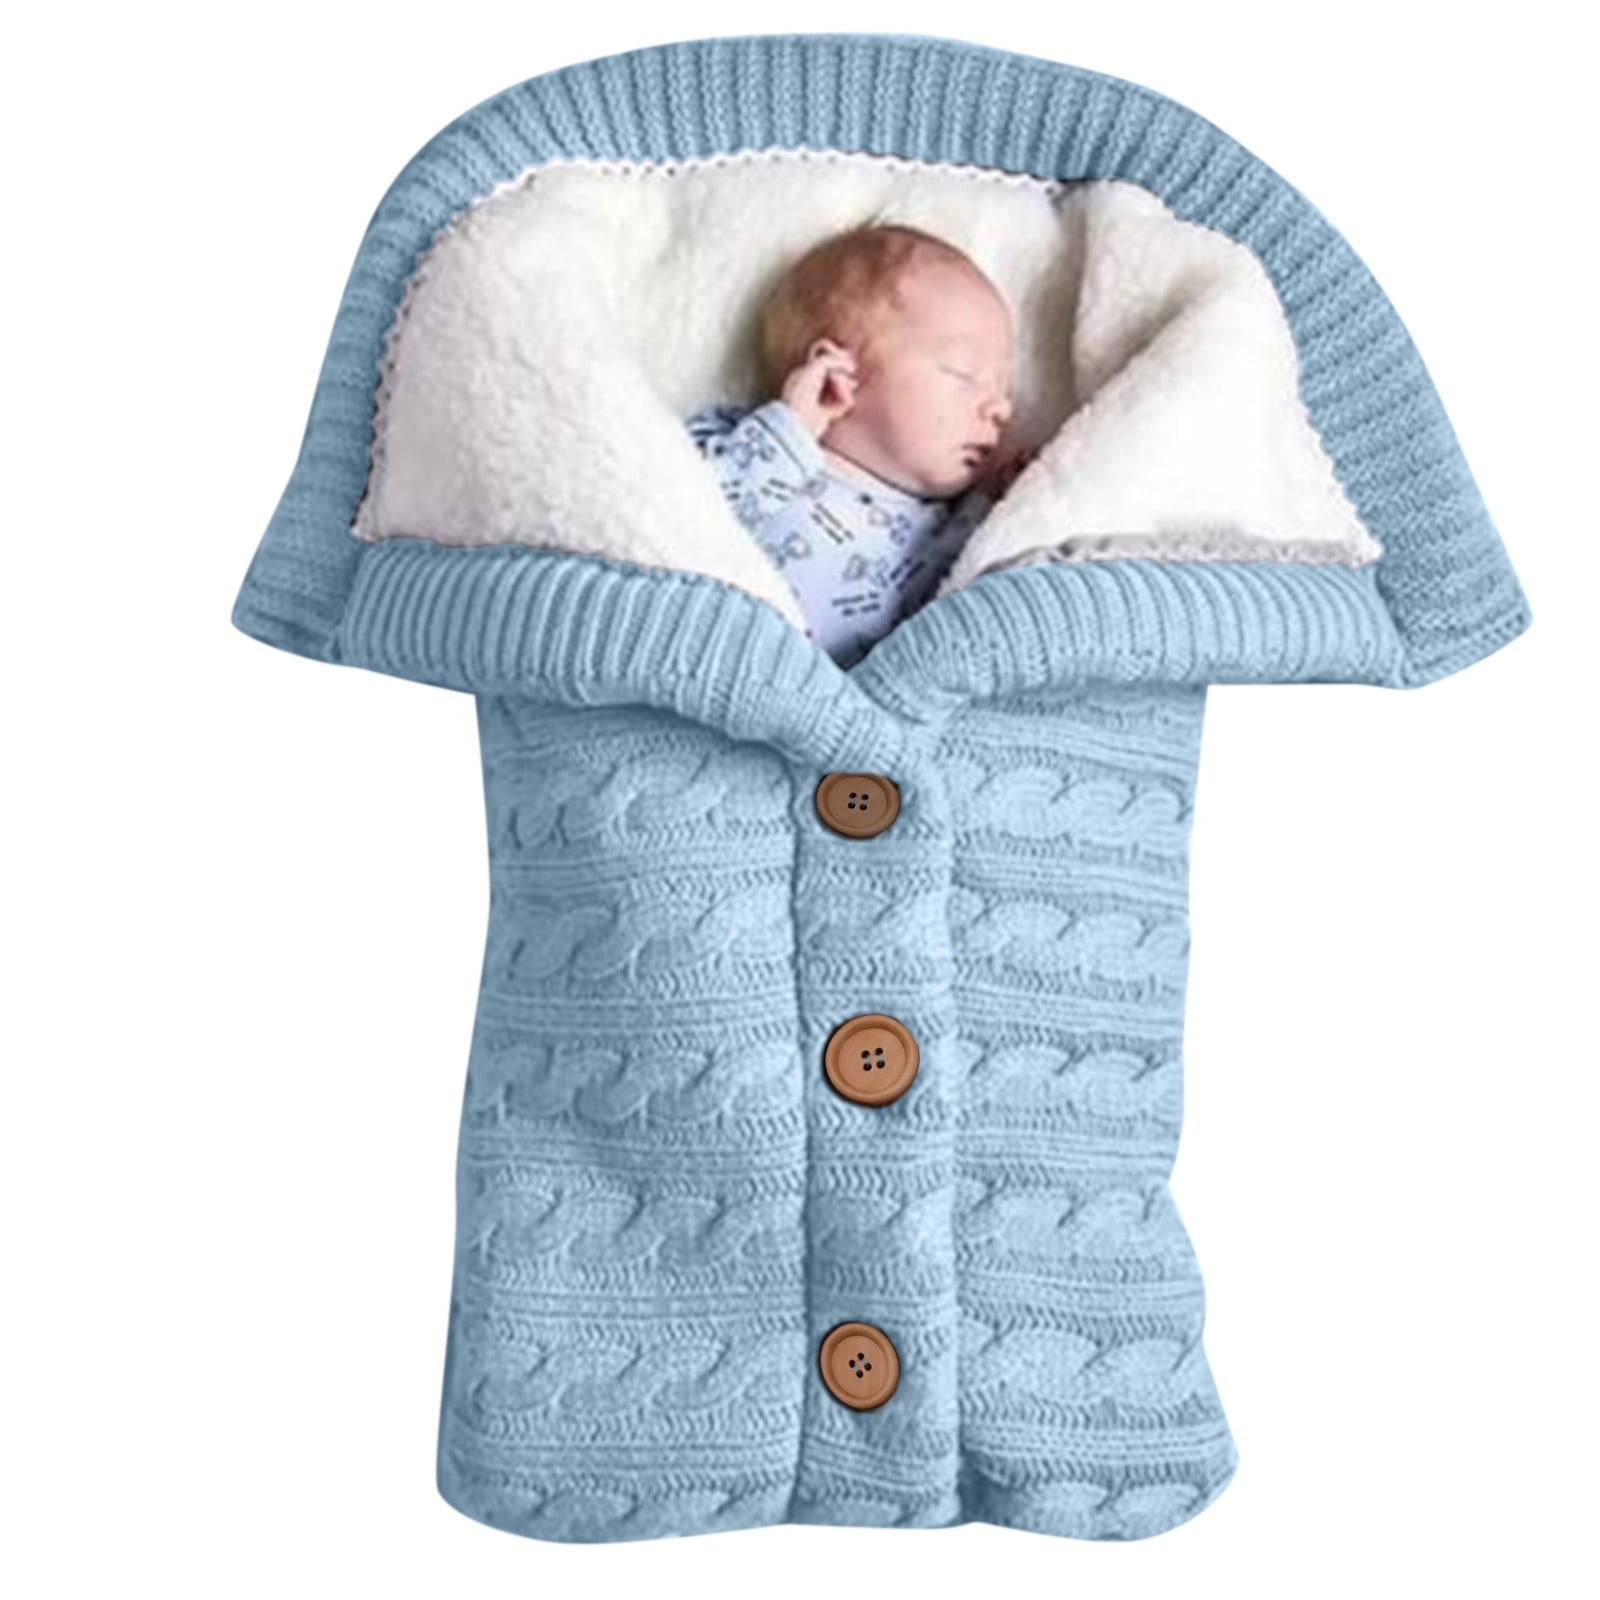 Toddler Infant Baby Blanket Swaddle Sleeping Bag Sleepsack Stroller Wrap Newborn 